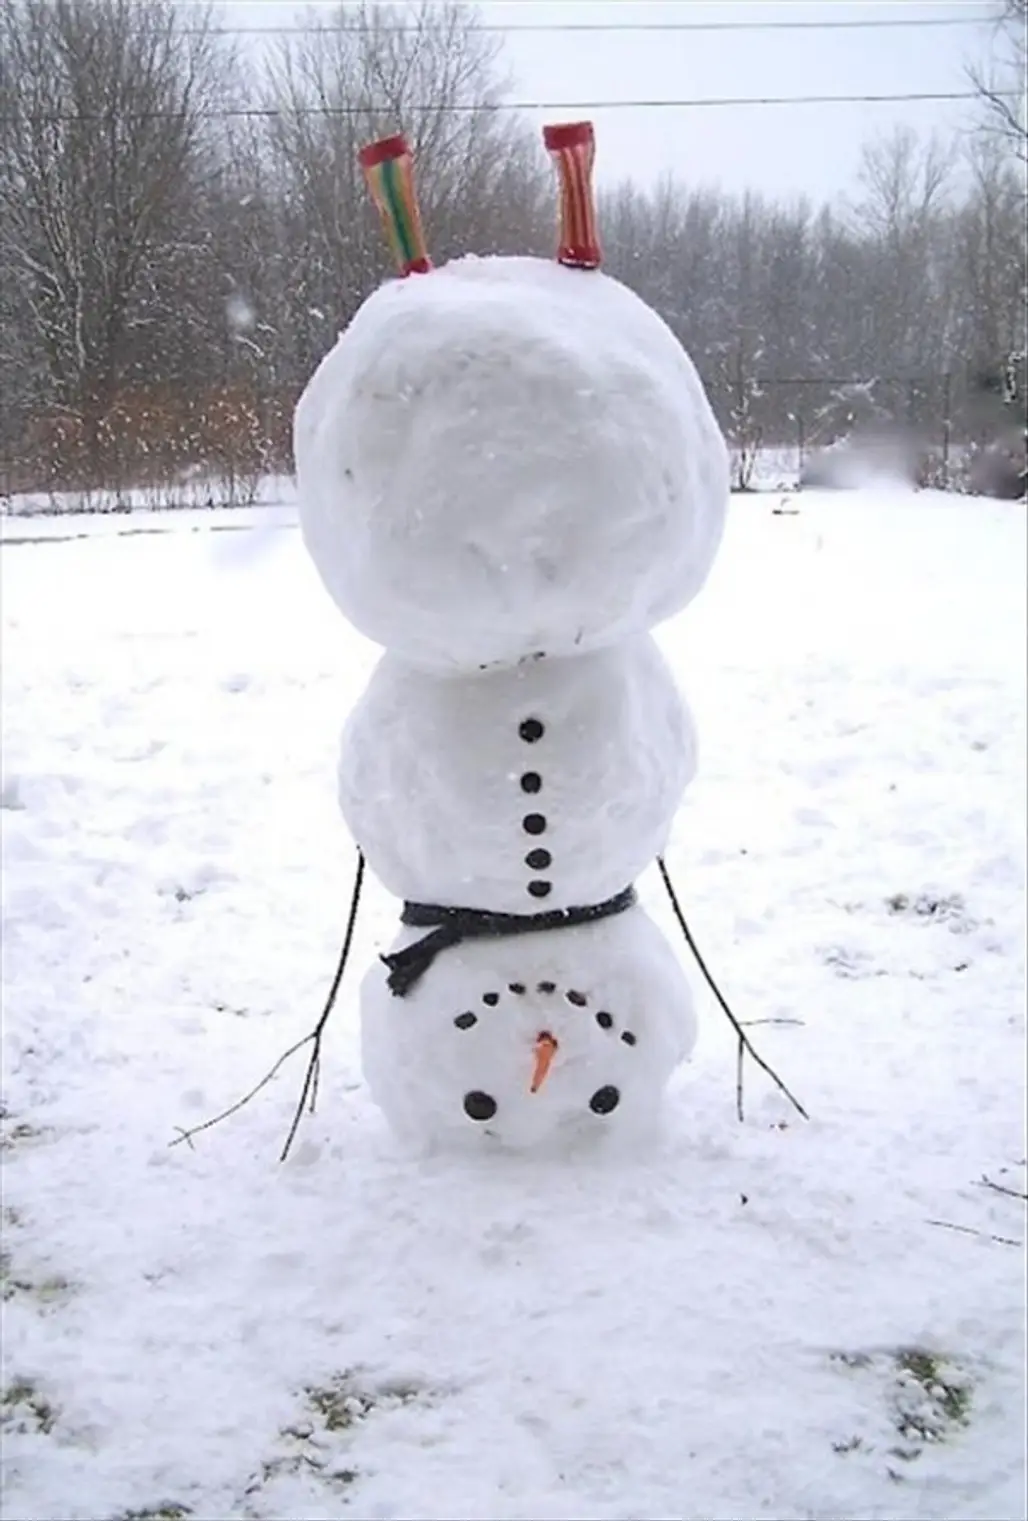 Build a Snowman